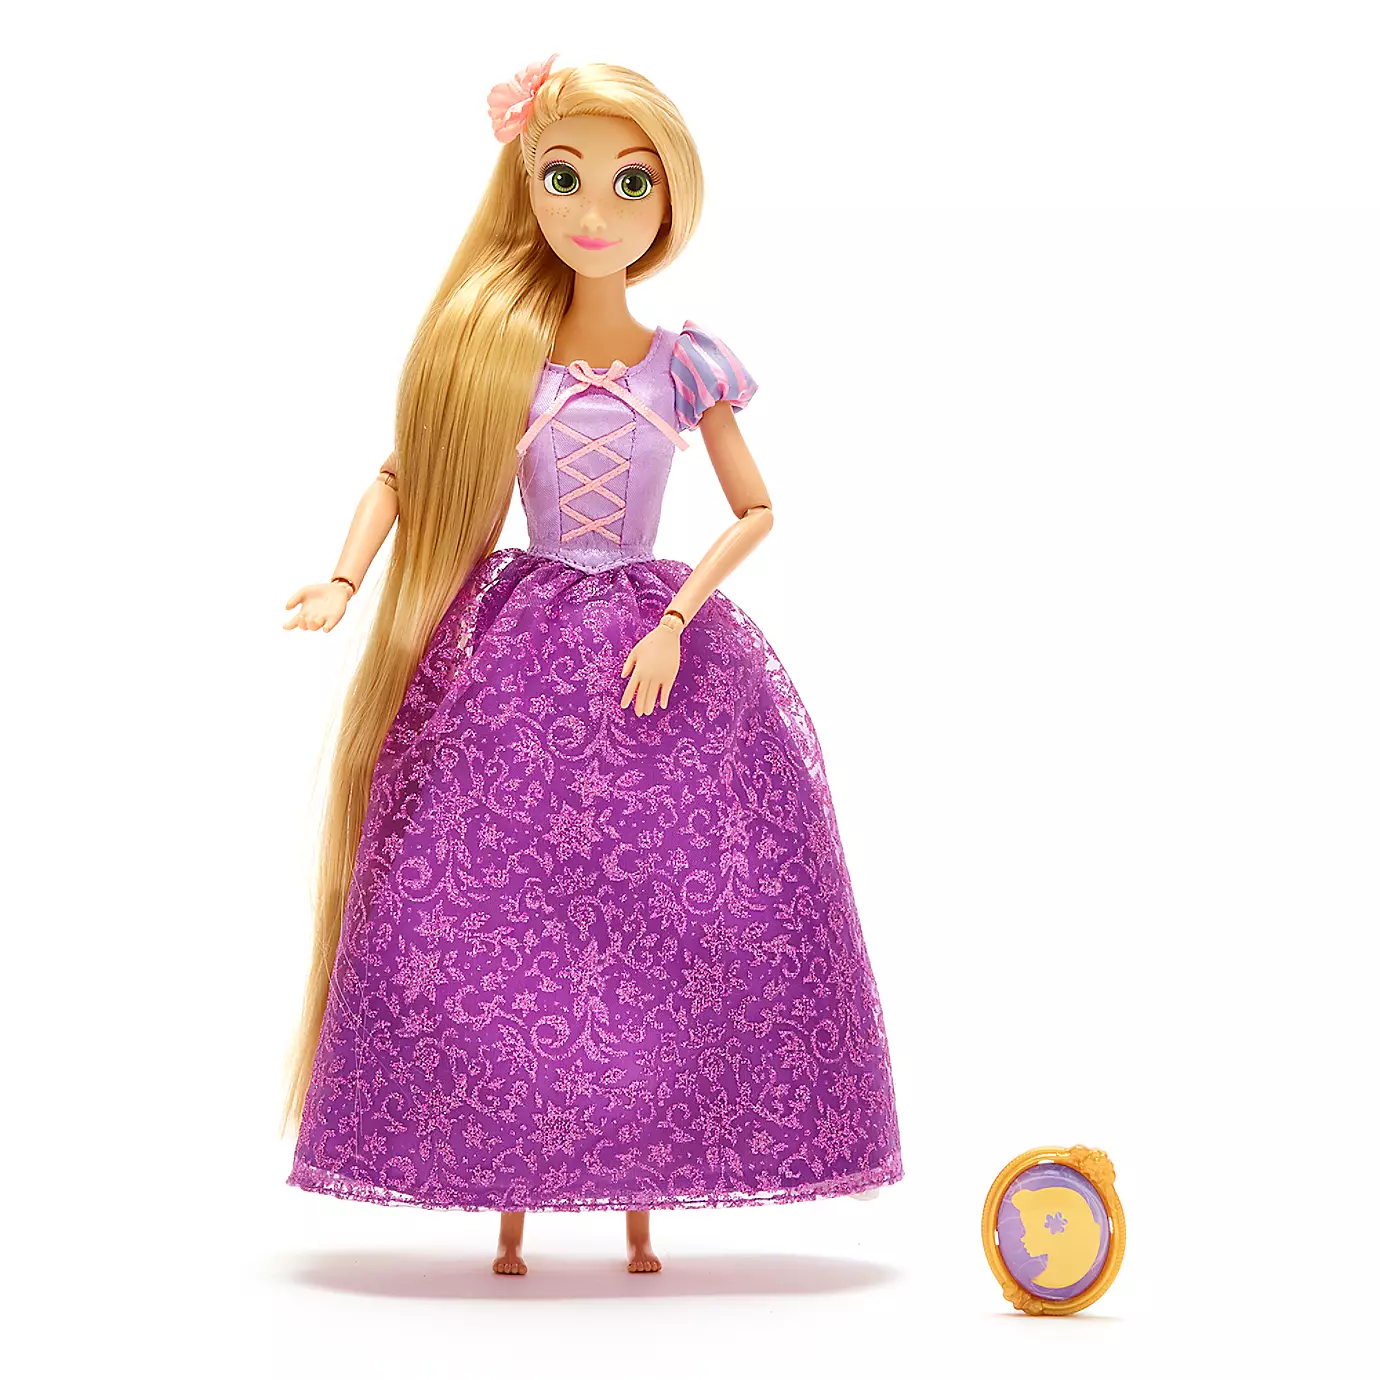 Rapunzel Disney princesses Dolls.